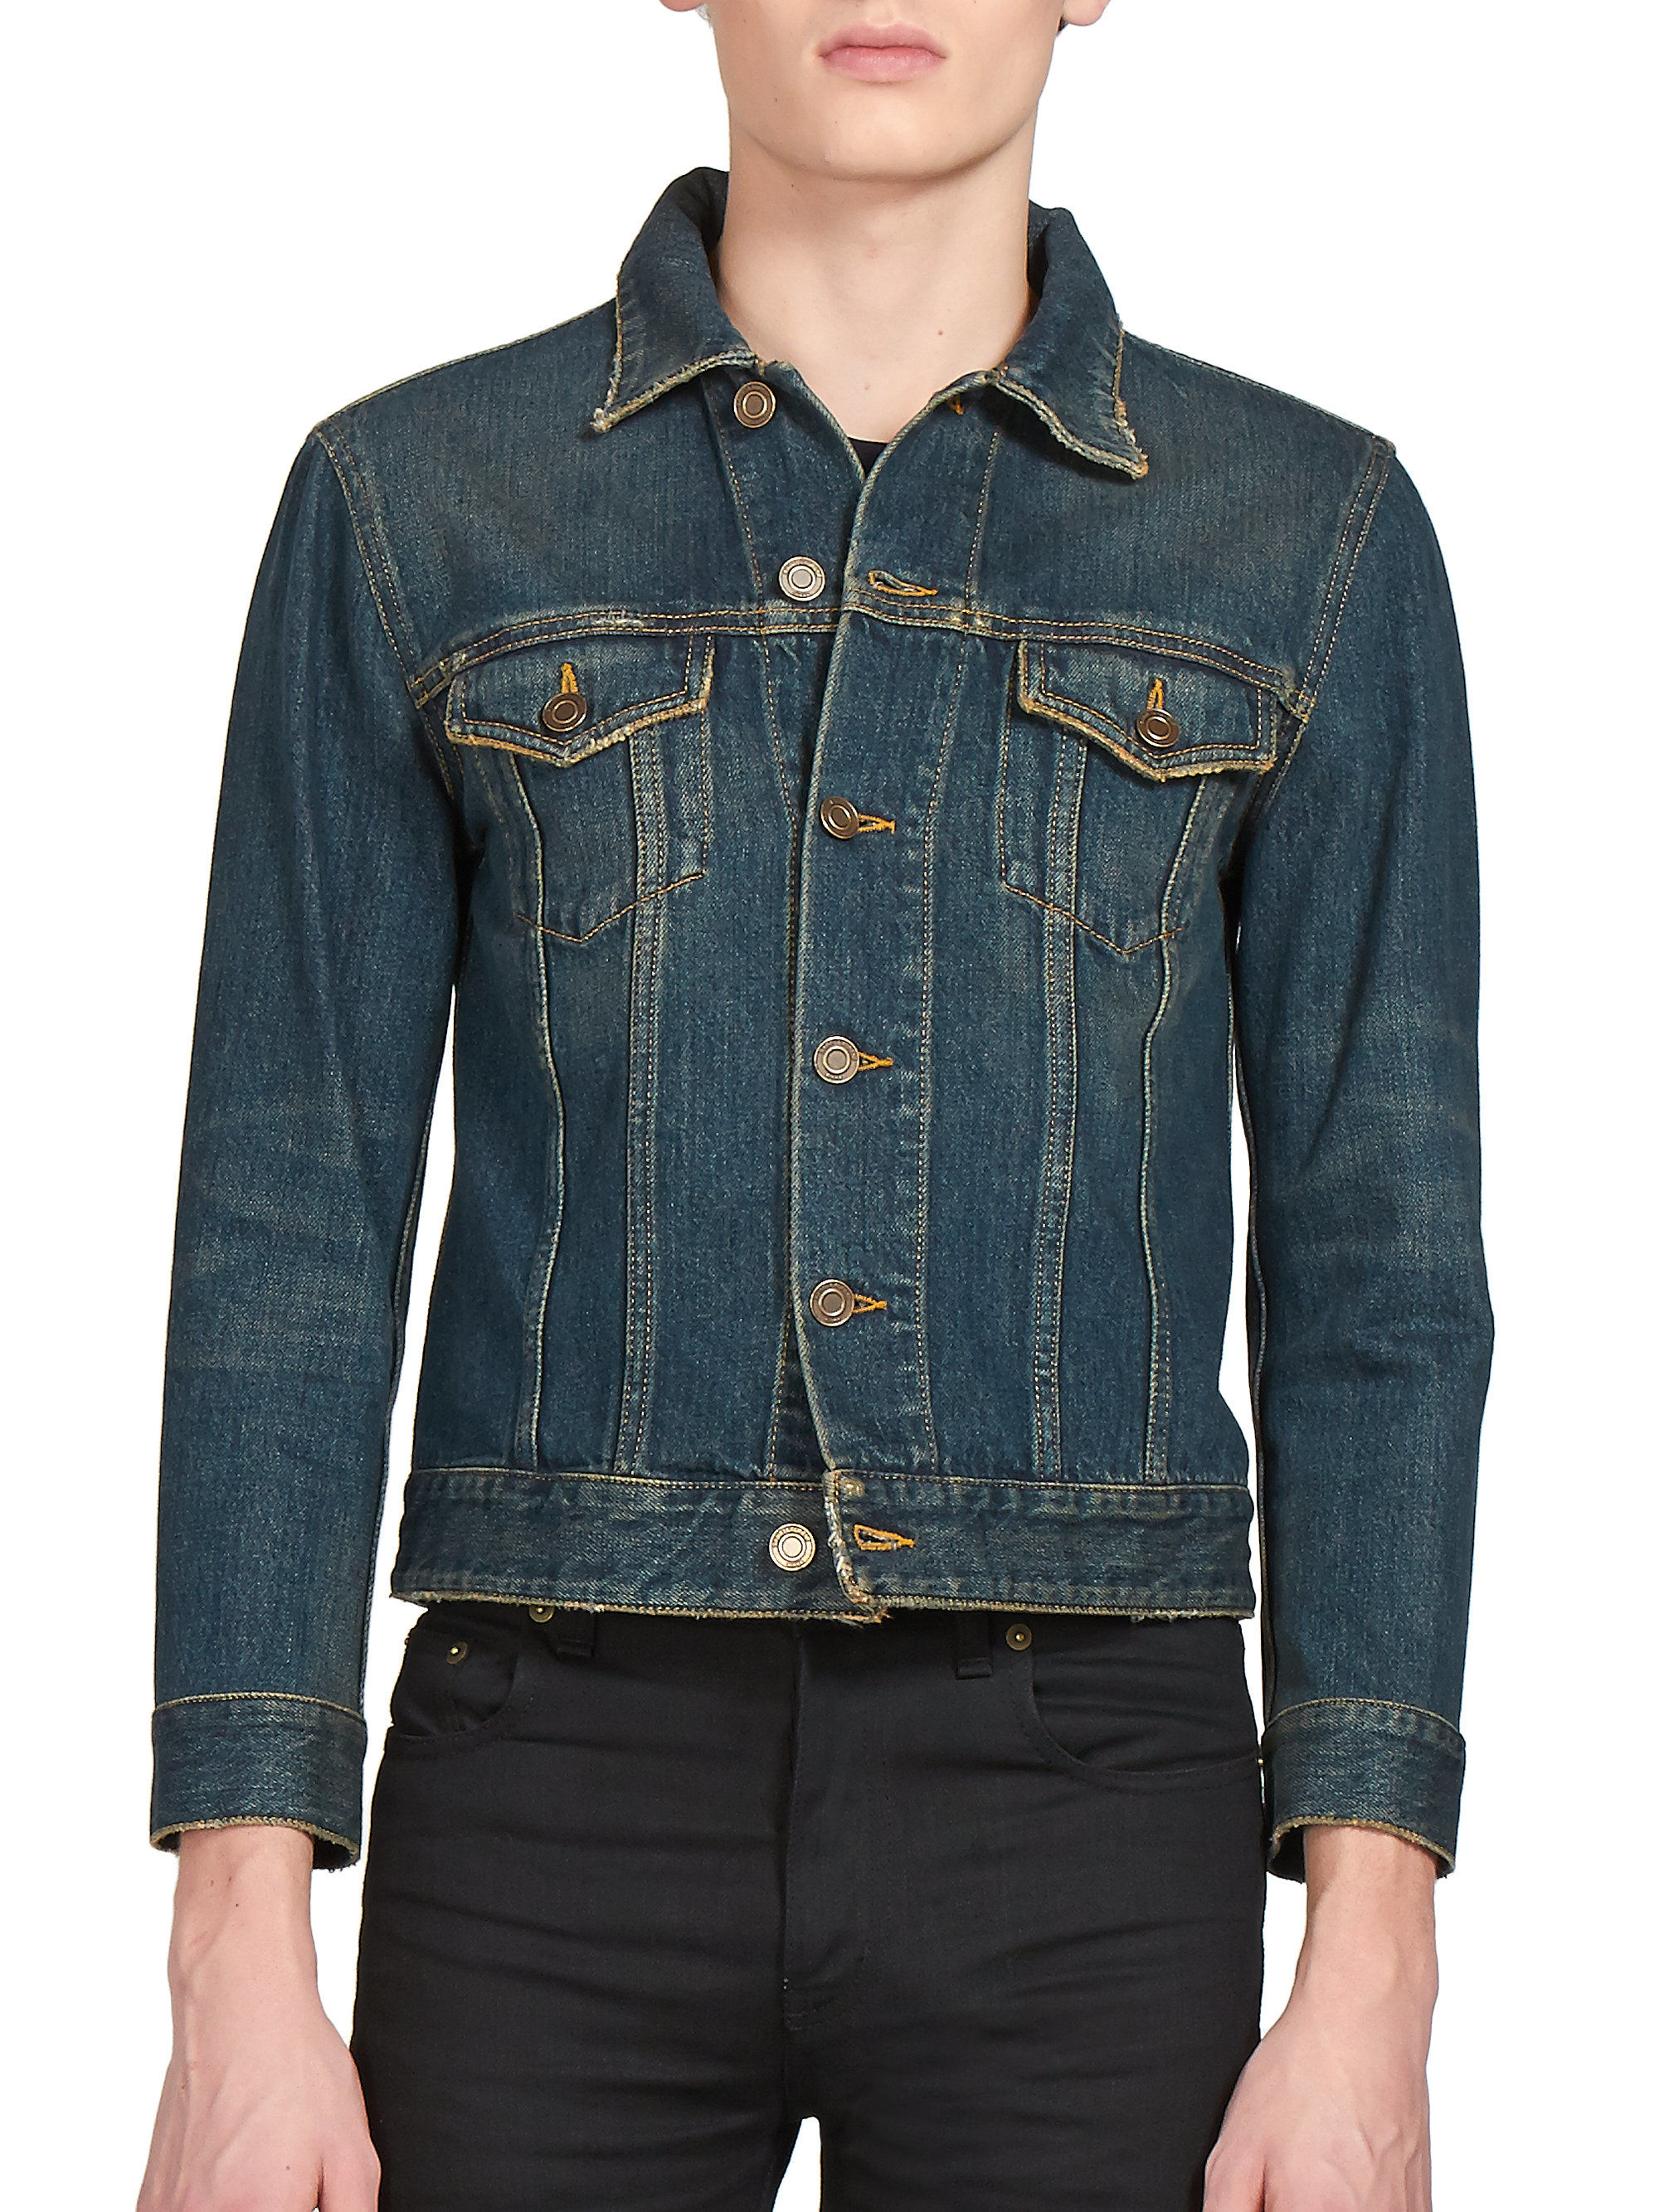 Lyst - Saint Laurent Denim Jacket in Blue for Men